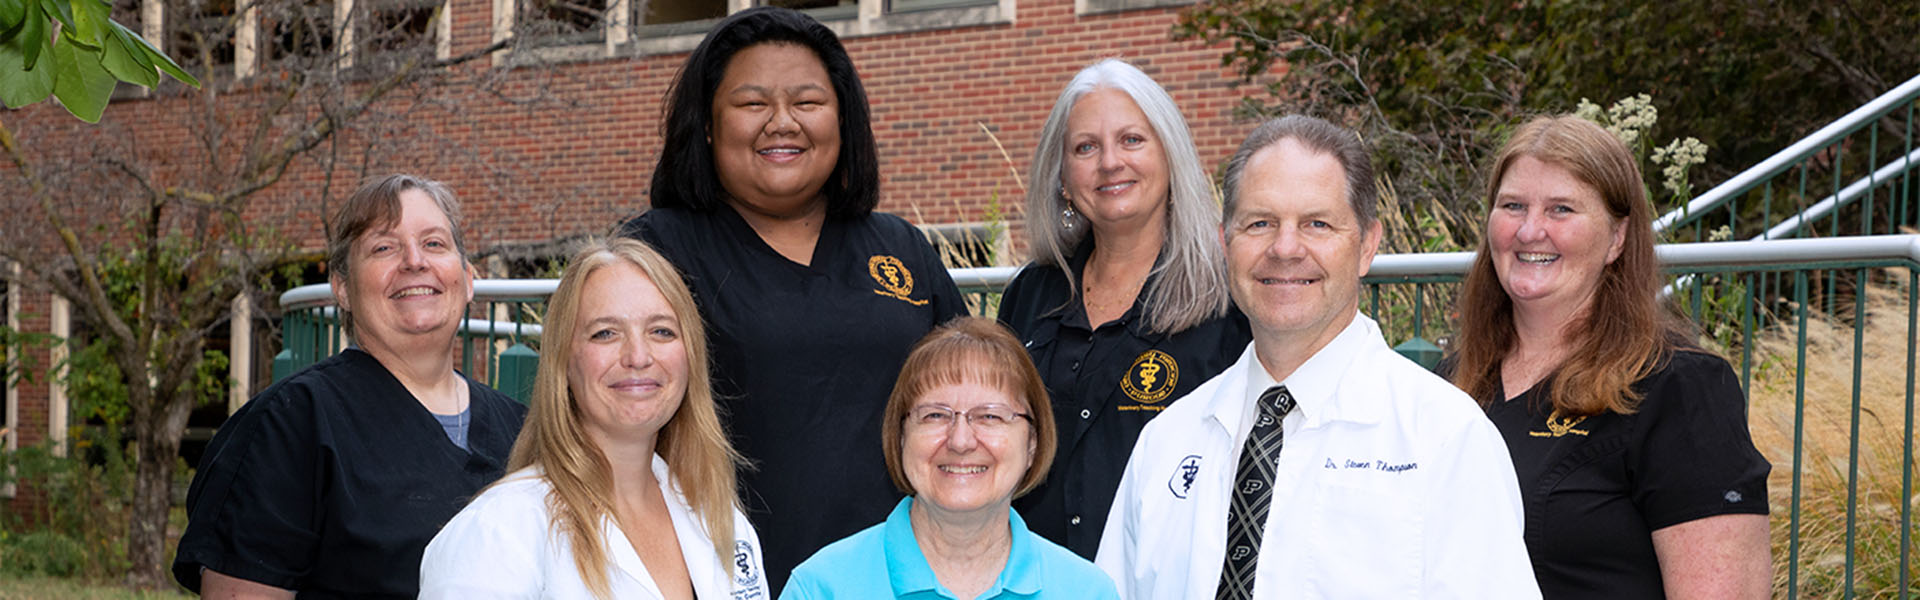 Our Team - College of Veterinary Medicine - Purdue University